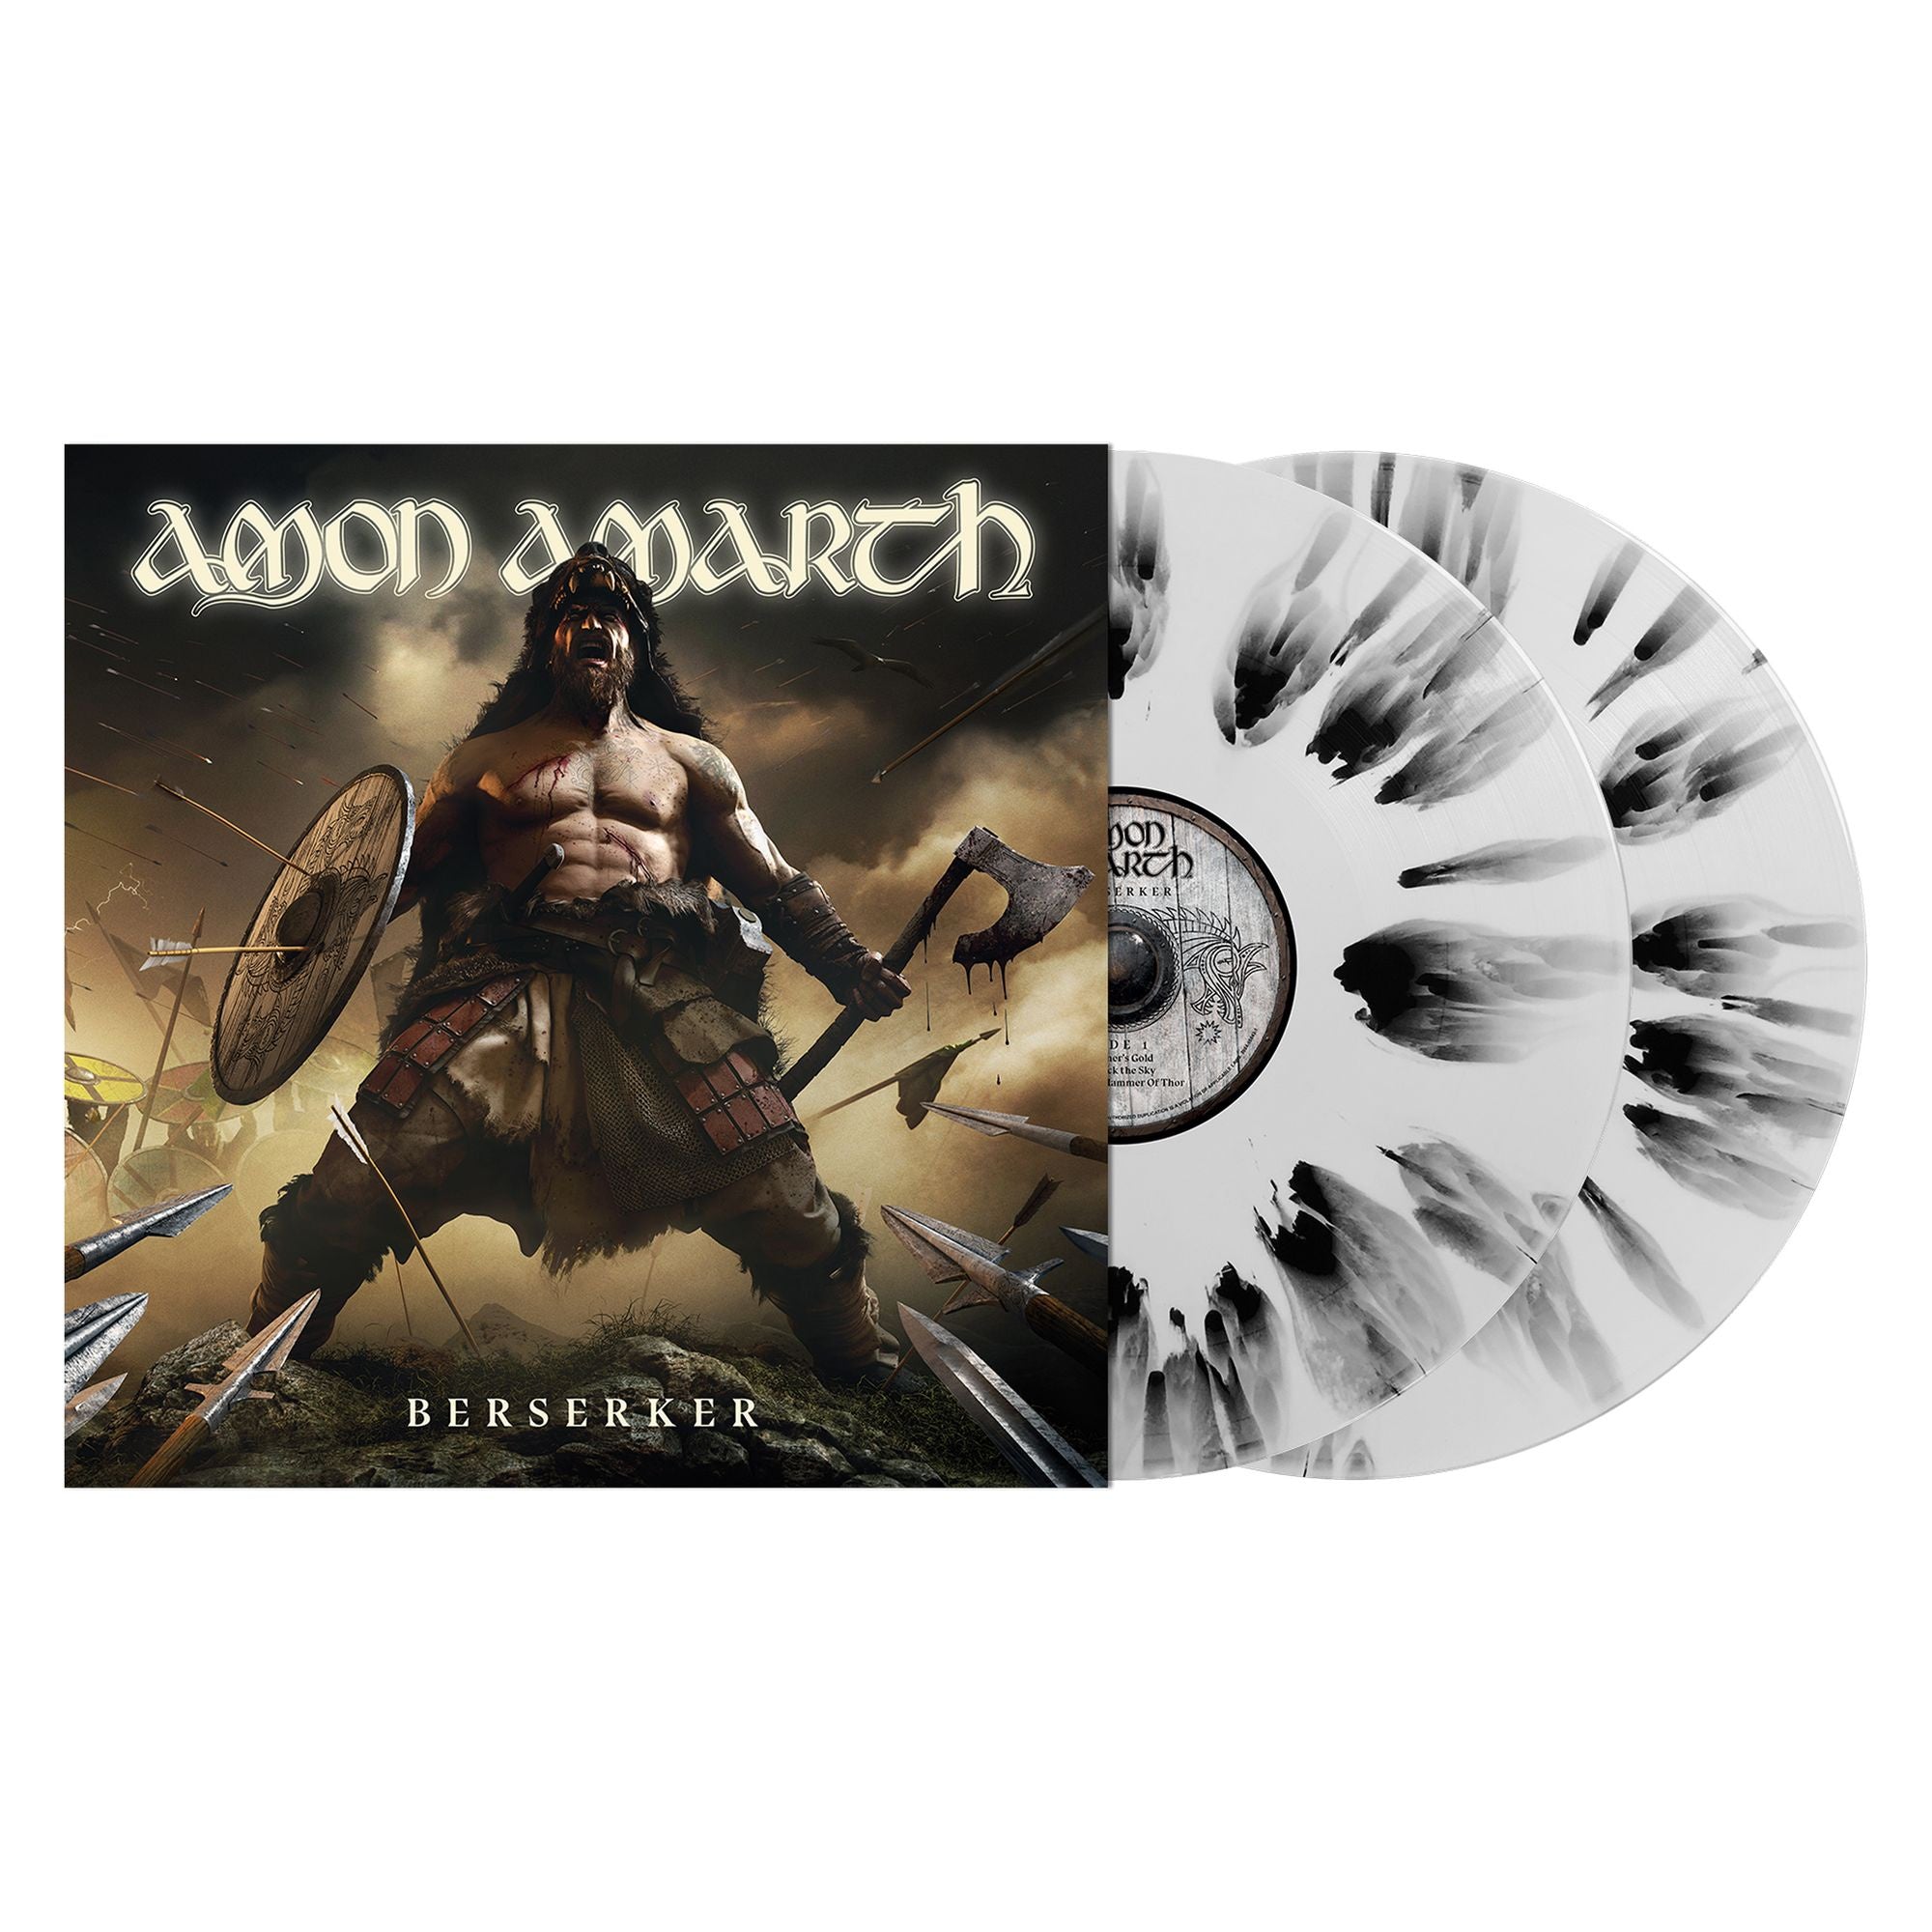 Amon Amarth ‎– Berserker - New 2 Lp 2019 Metal Blade White with Black Splattered Vinyl - Metal